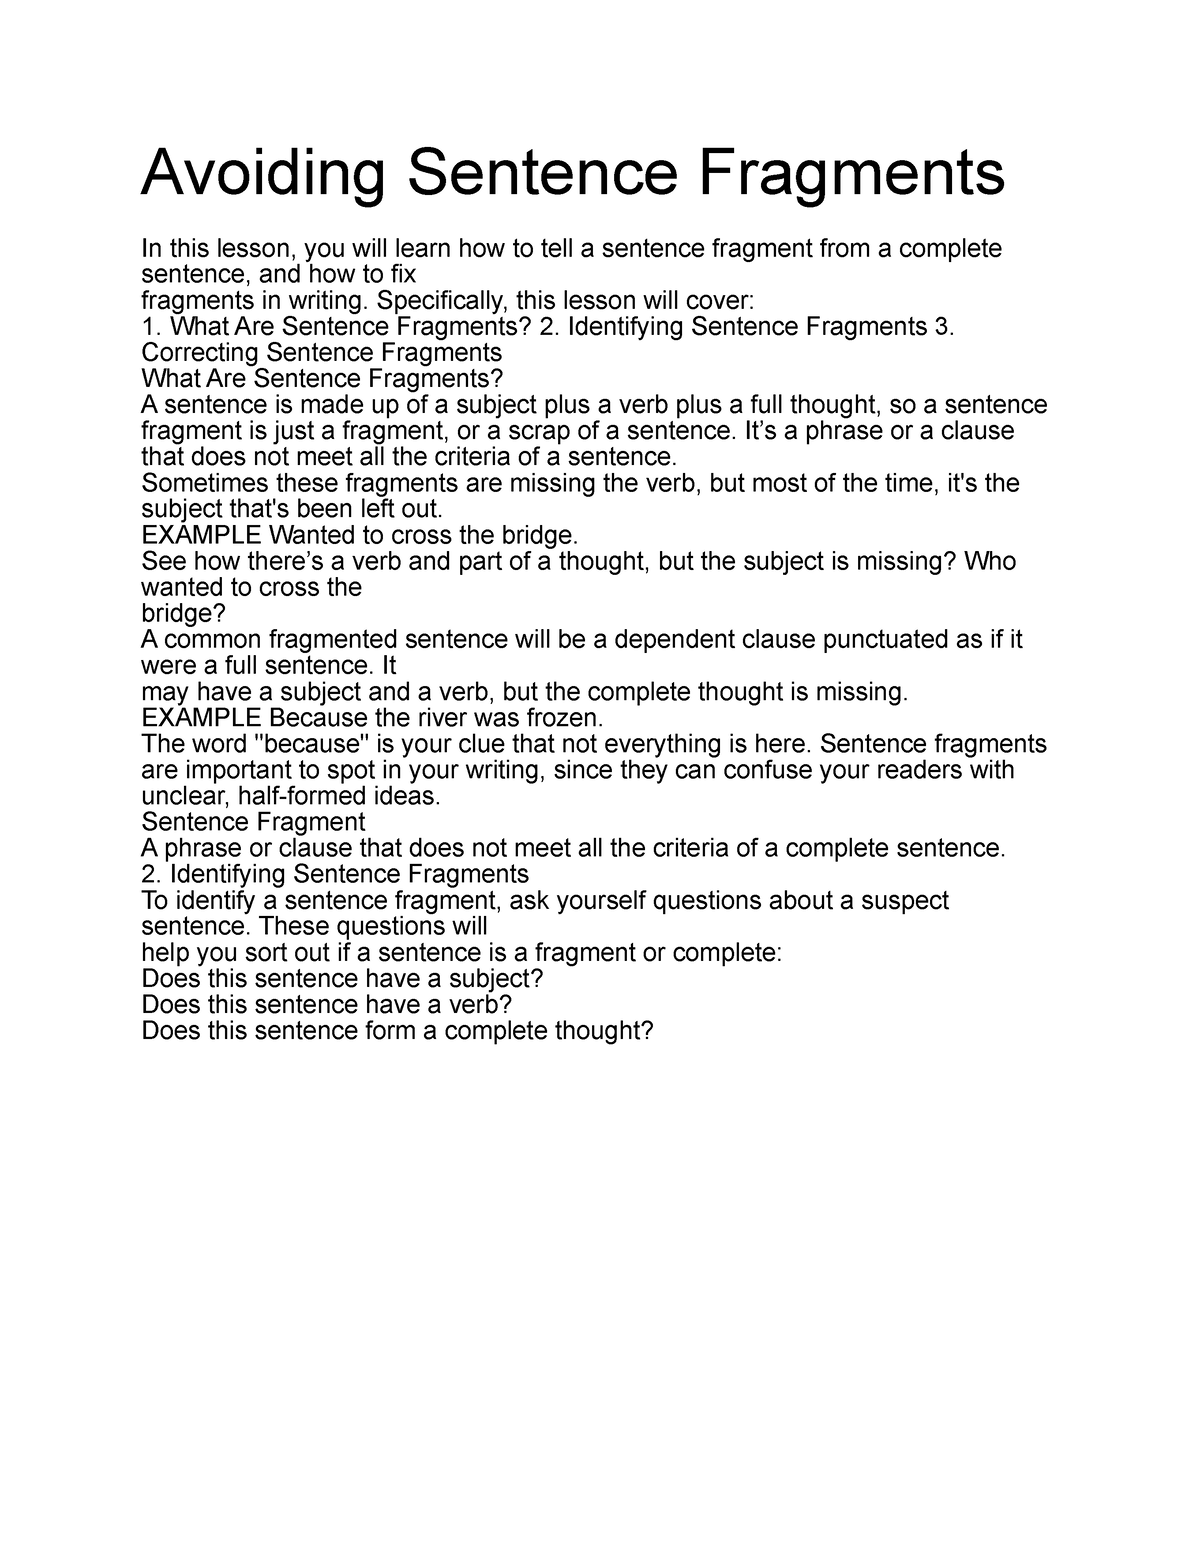 Identifying Sentence Fragments Answer Key